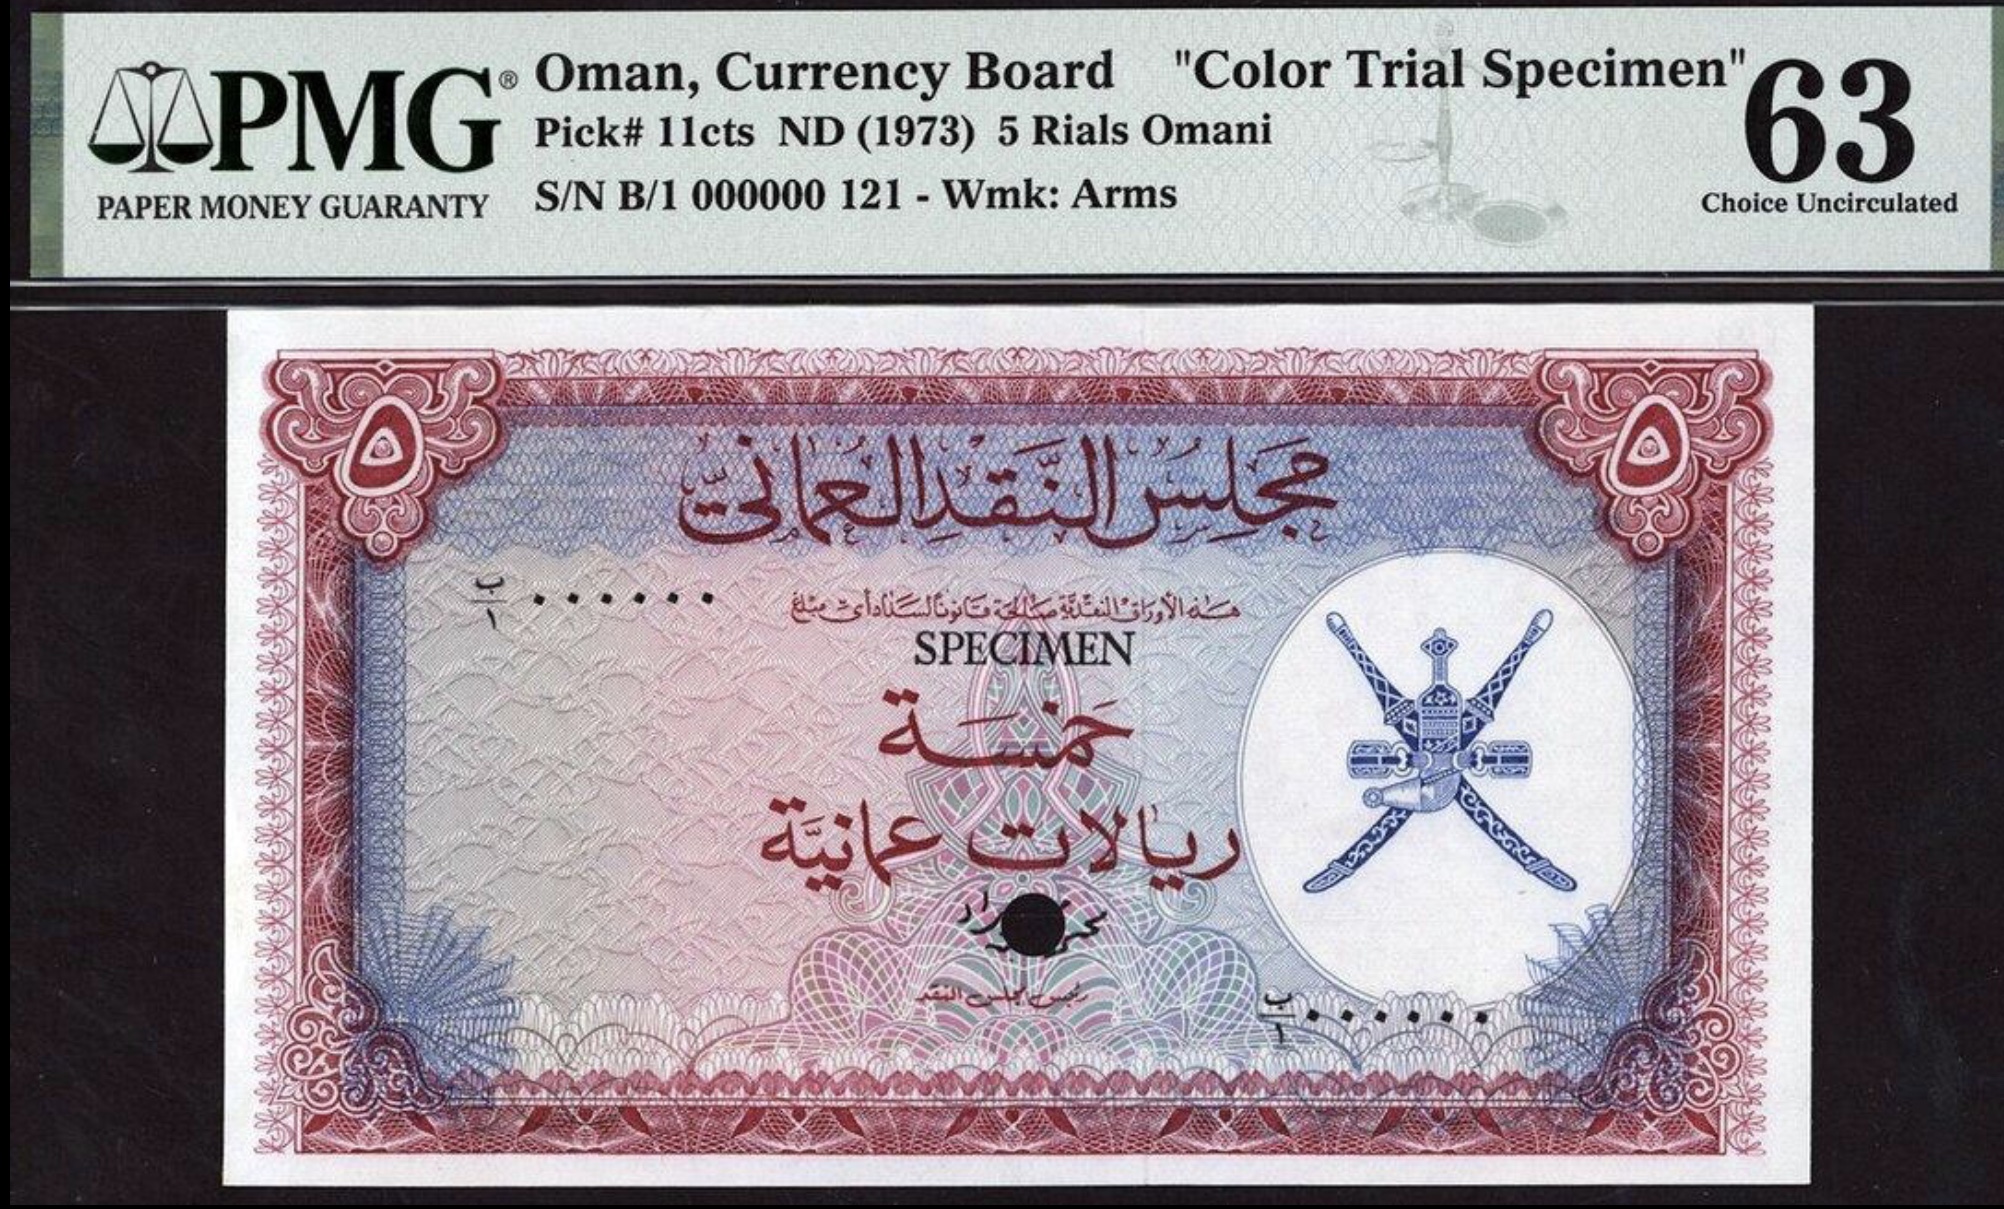 1973 Oman 5 Rials Omani Color Trial Specimen Banknote Pick 11cts PMG 63 UNC